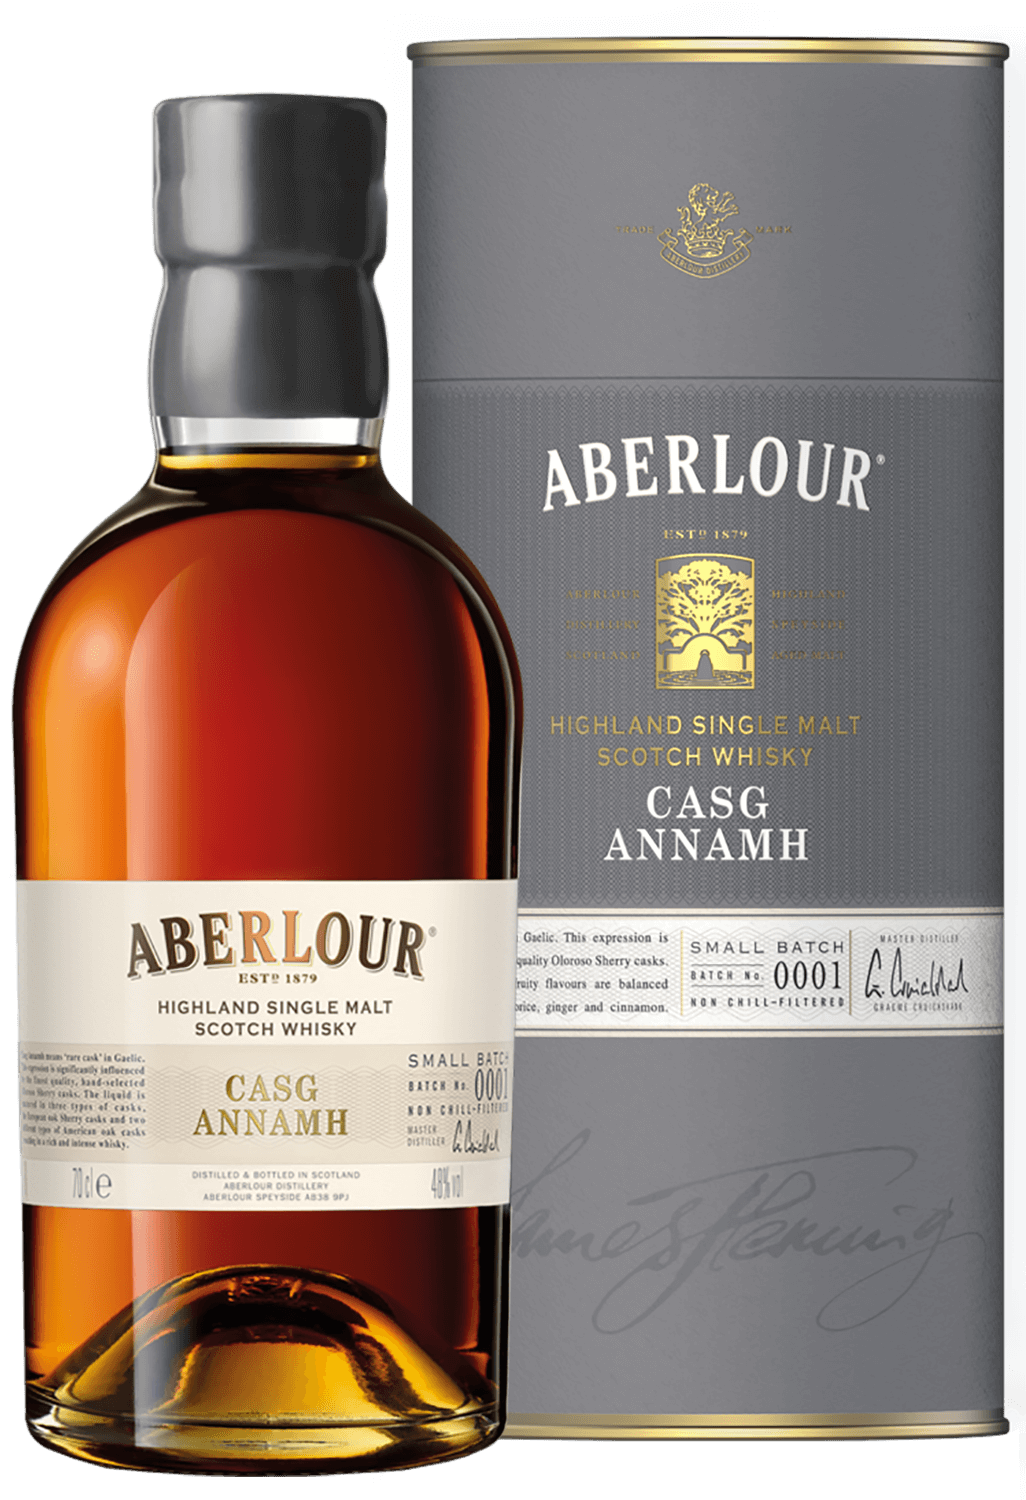 Aberlour Casg Annamh Single Malt Scotch Whisky (gift box)